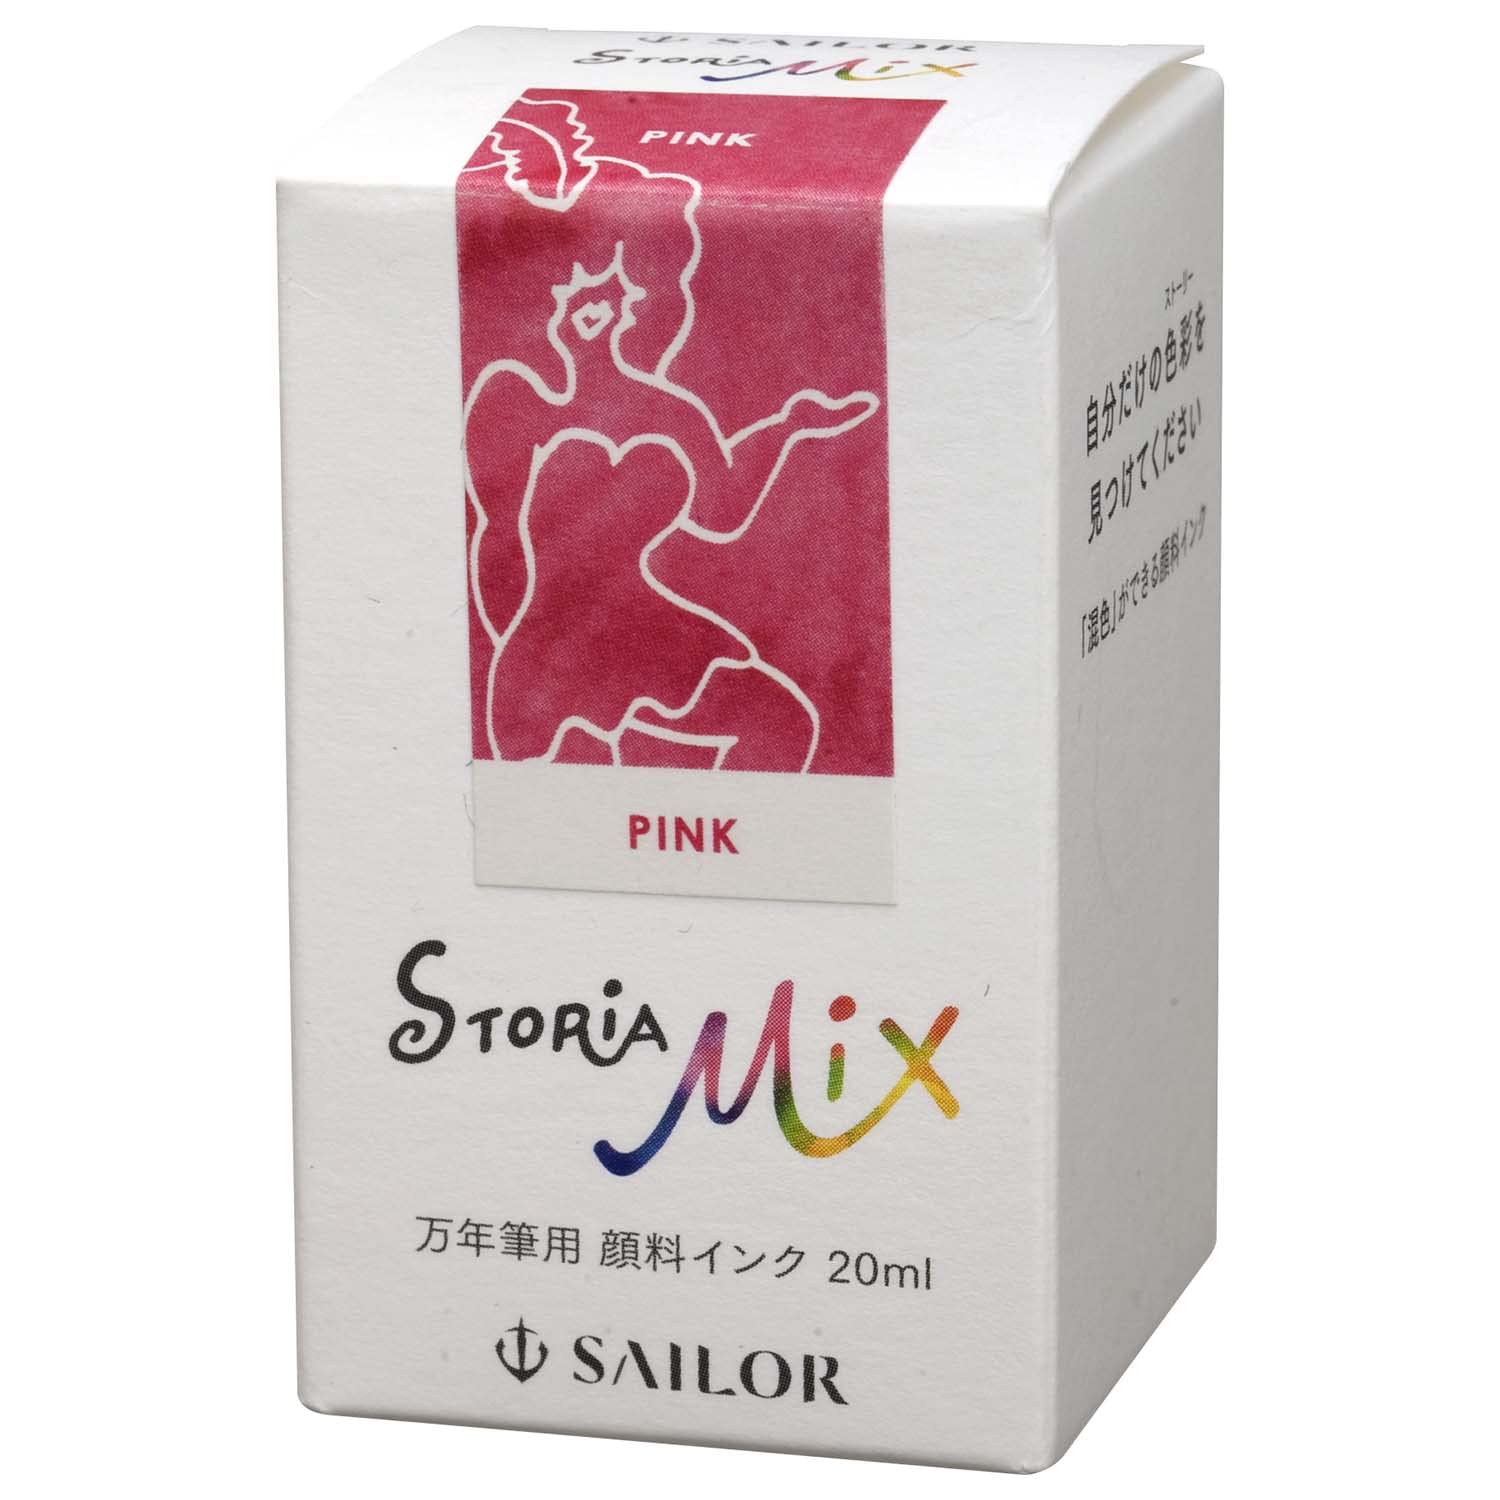 Sailor Fountain Pen Storia Mix Pigment Ink 20ml Pink - Model 13-1503-231